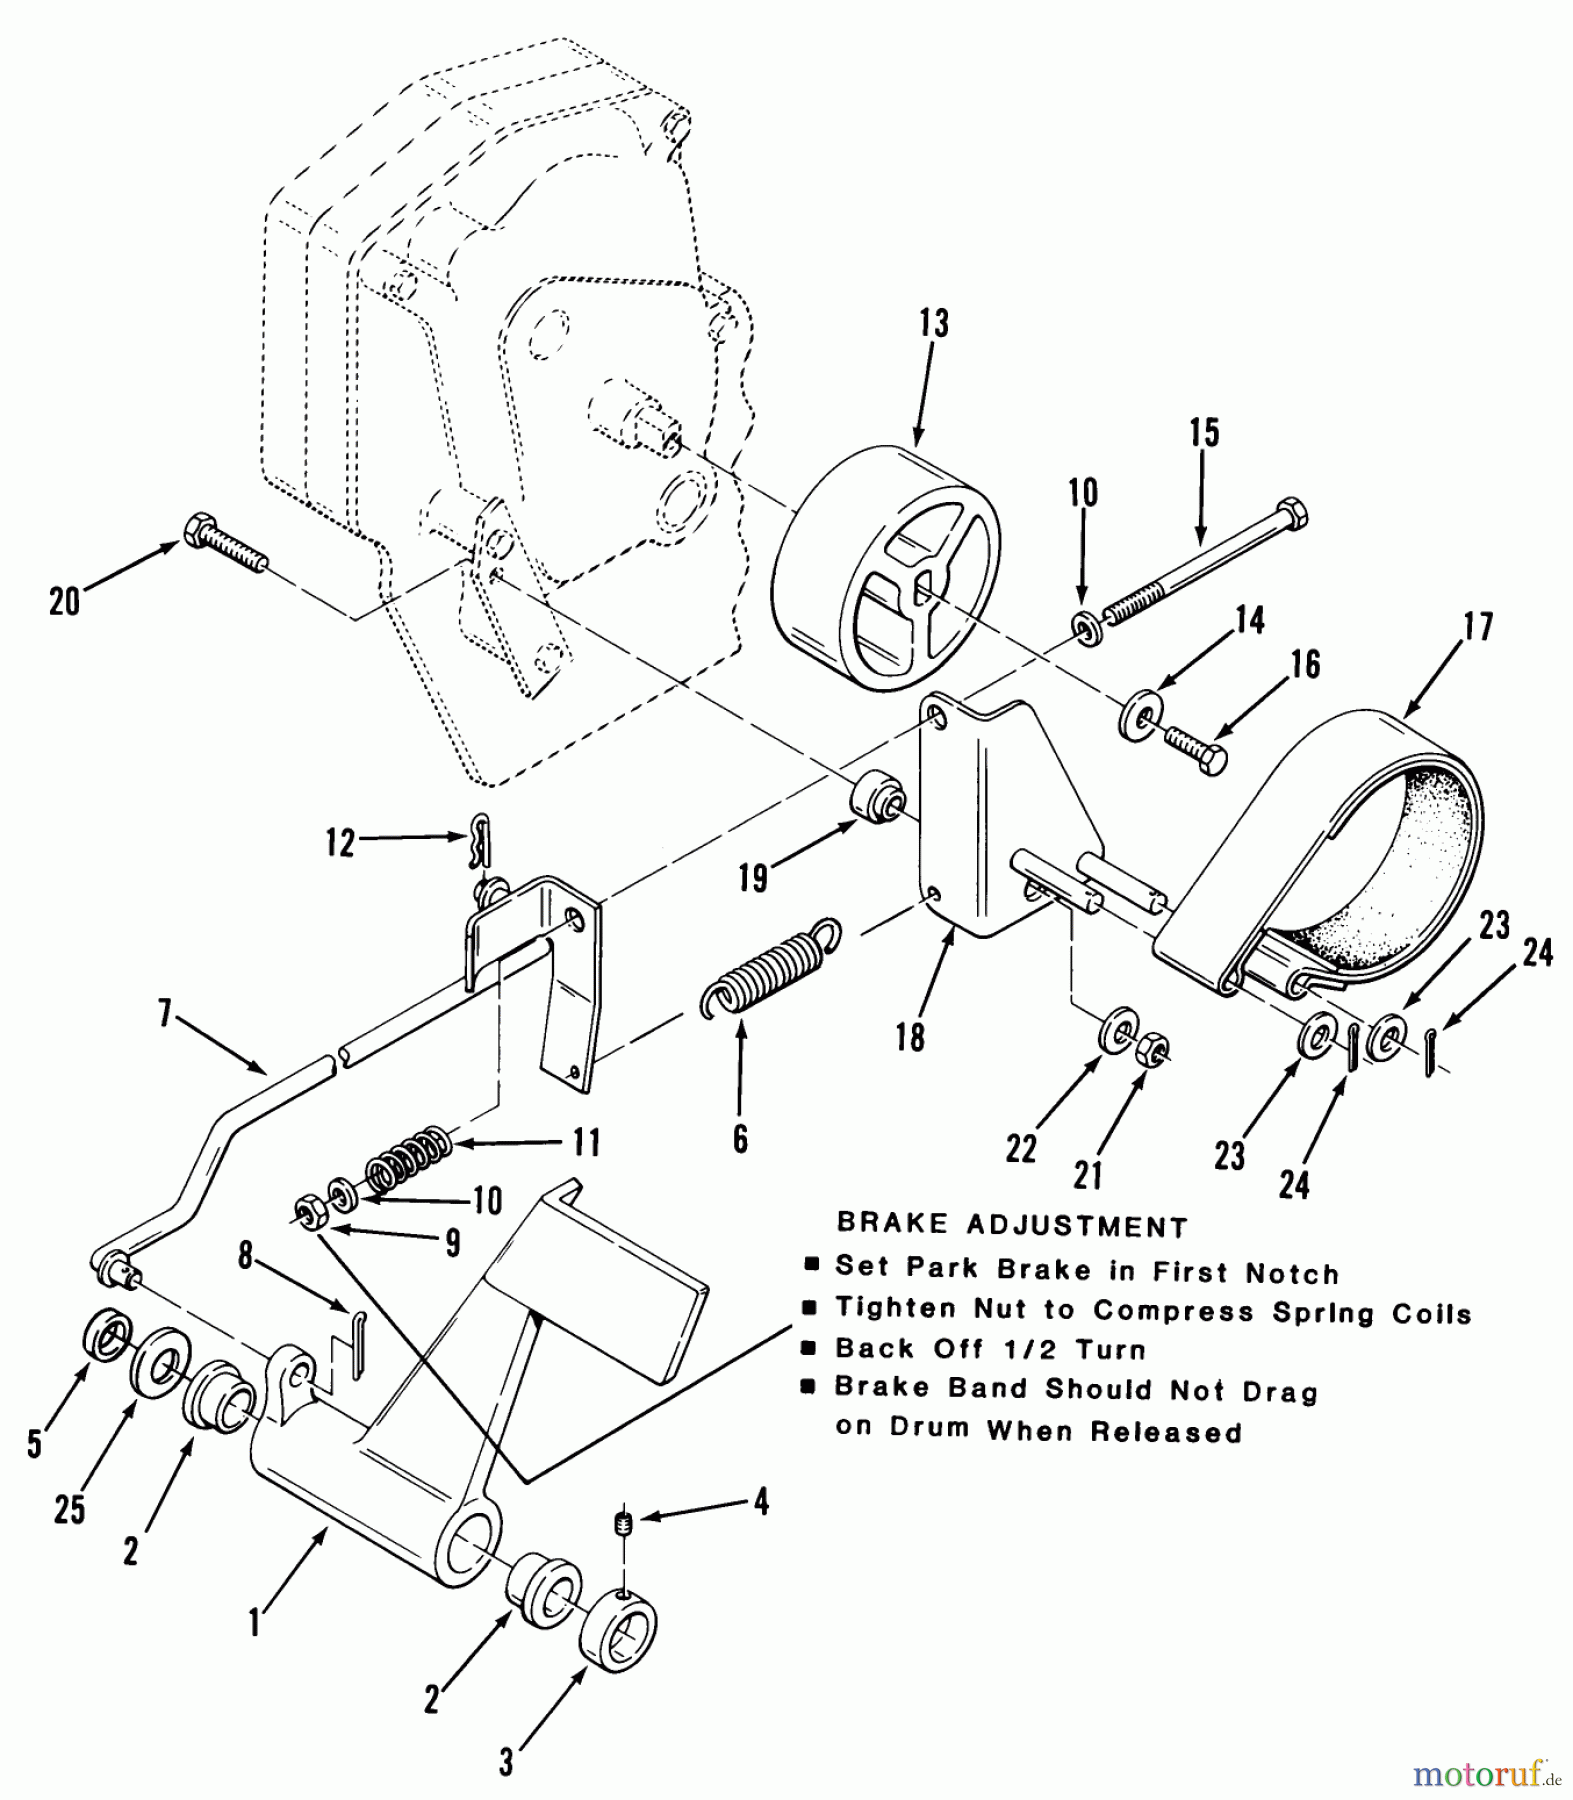  Toro Neu Mowers, Lawn & Garden Tractor Seite 1 01-14KE04 (C-145) - Toro C-145 Automatic Tractor, 1983 CLUTCH, BRAKE AND SPEED CONTROL LINKAGE #3